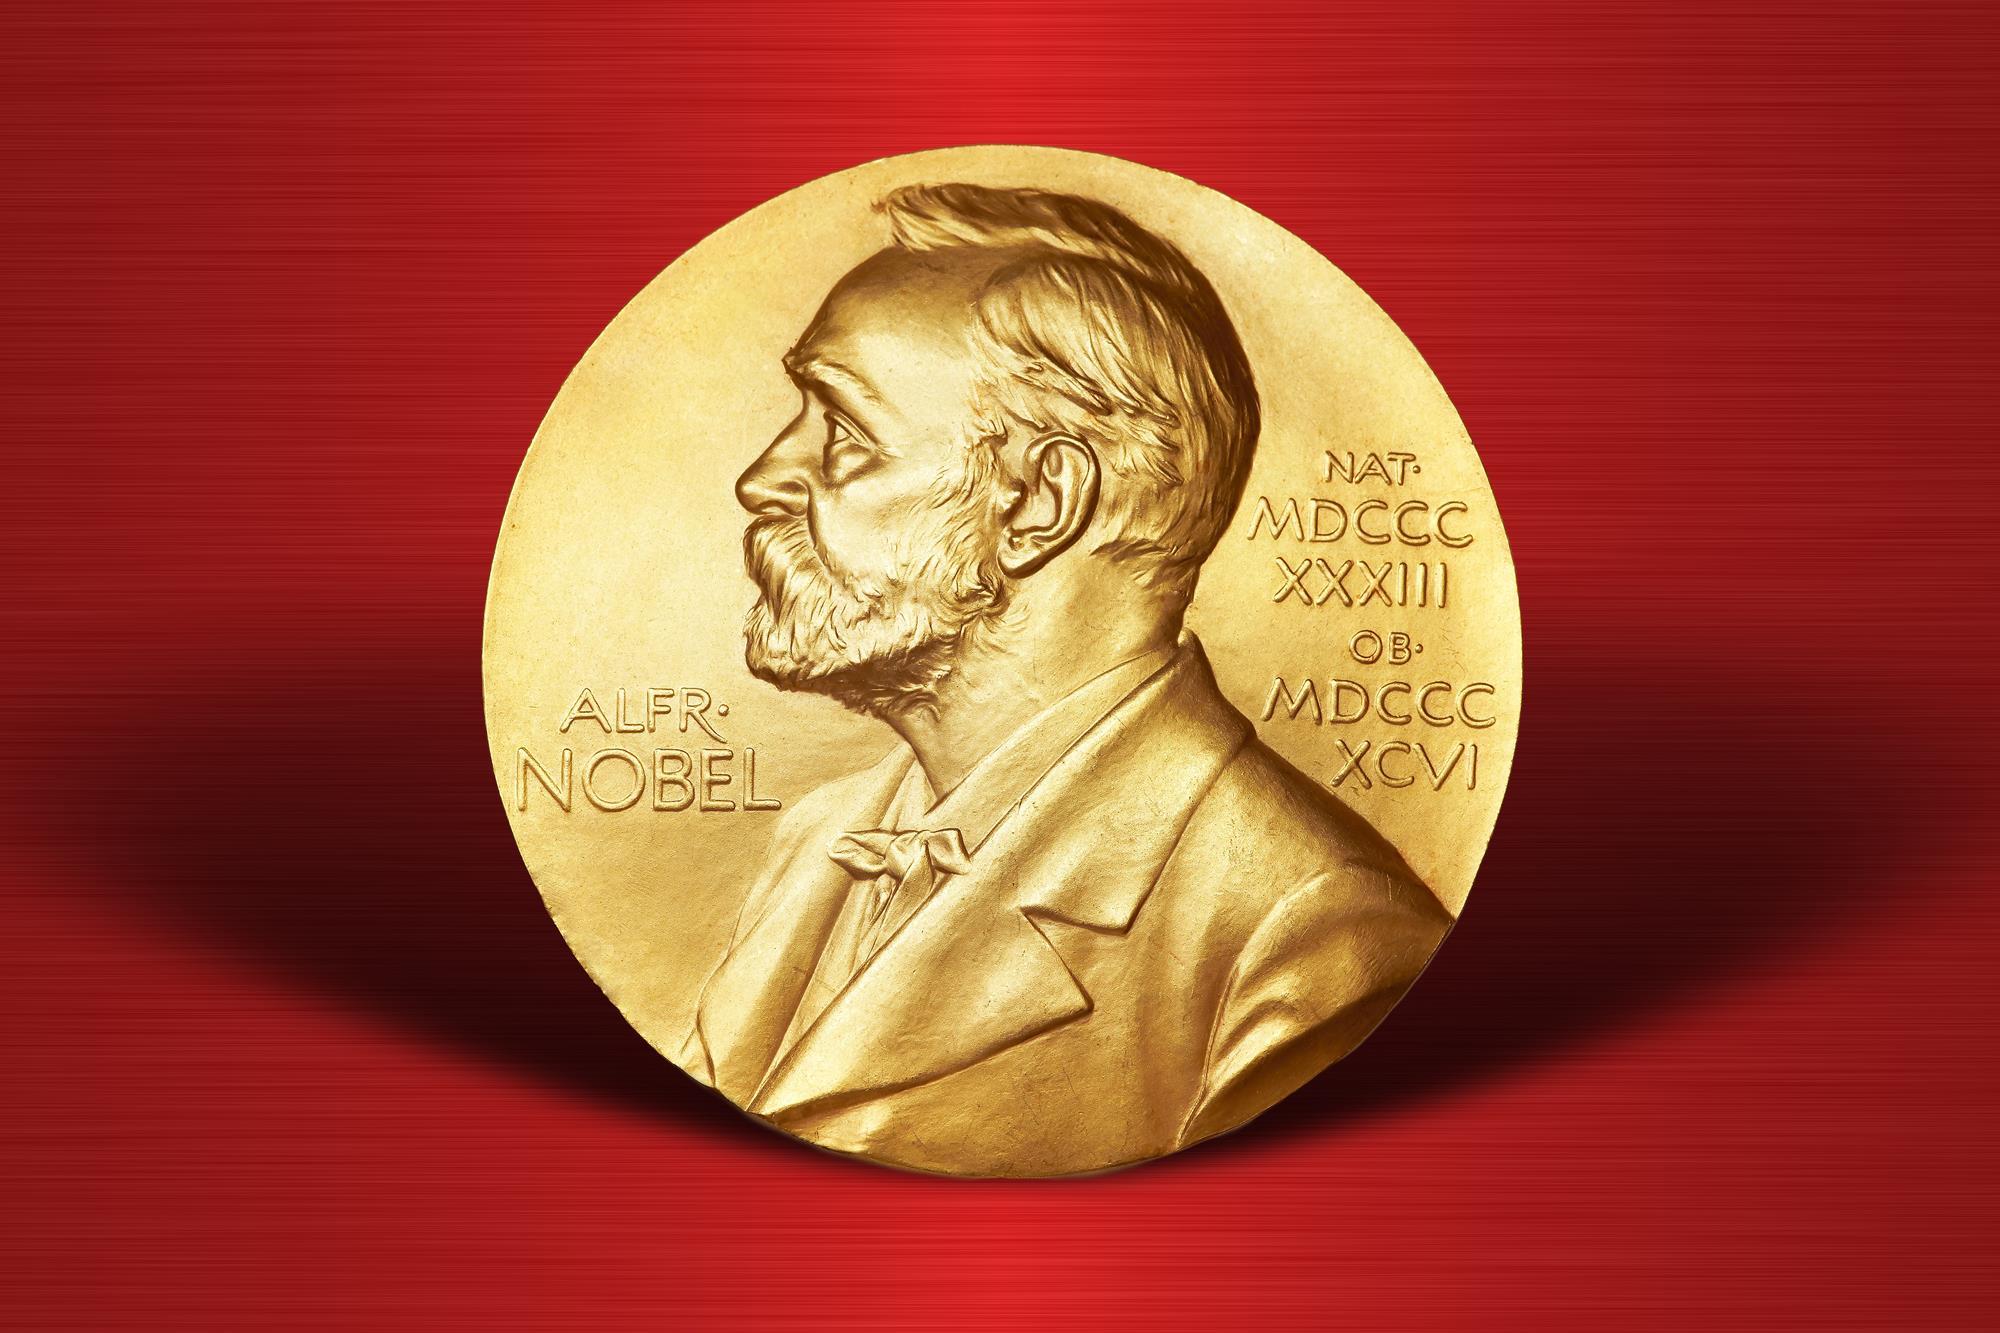 Nobel laureate